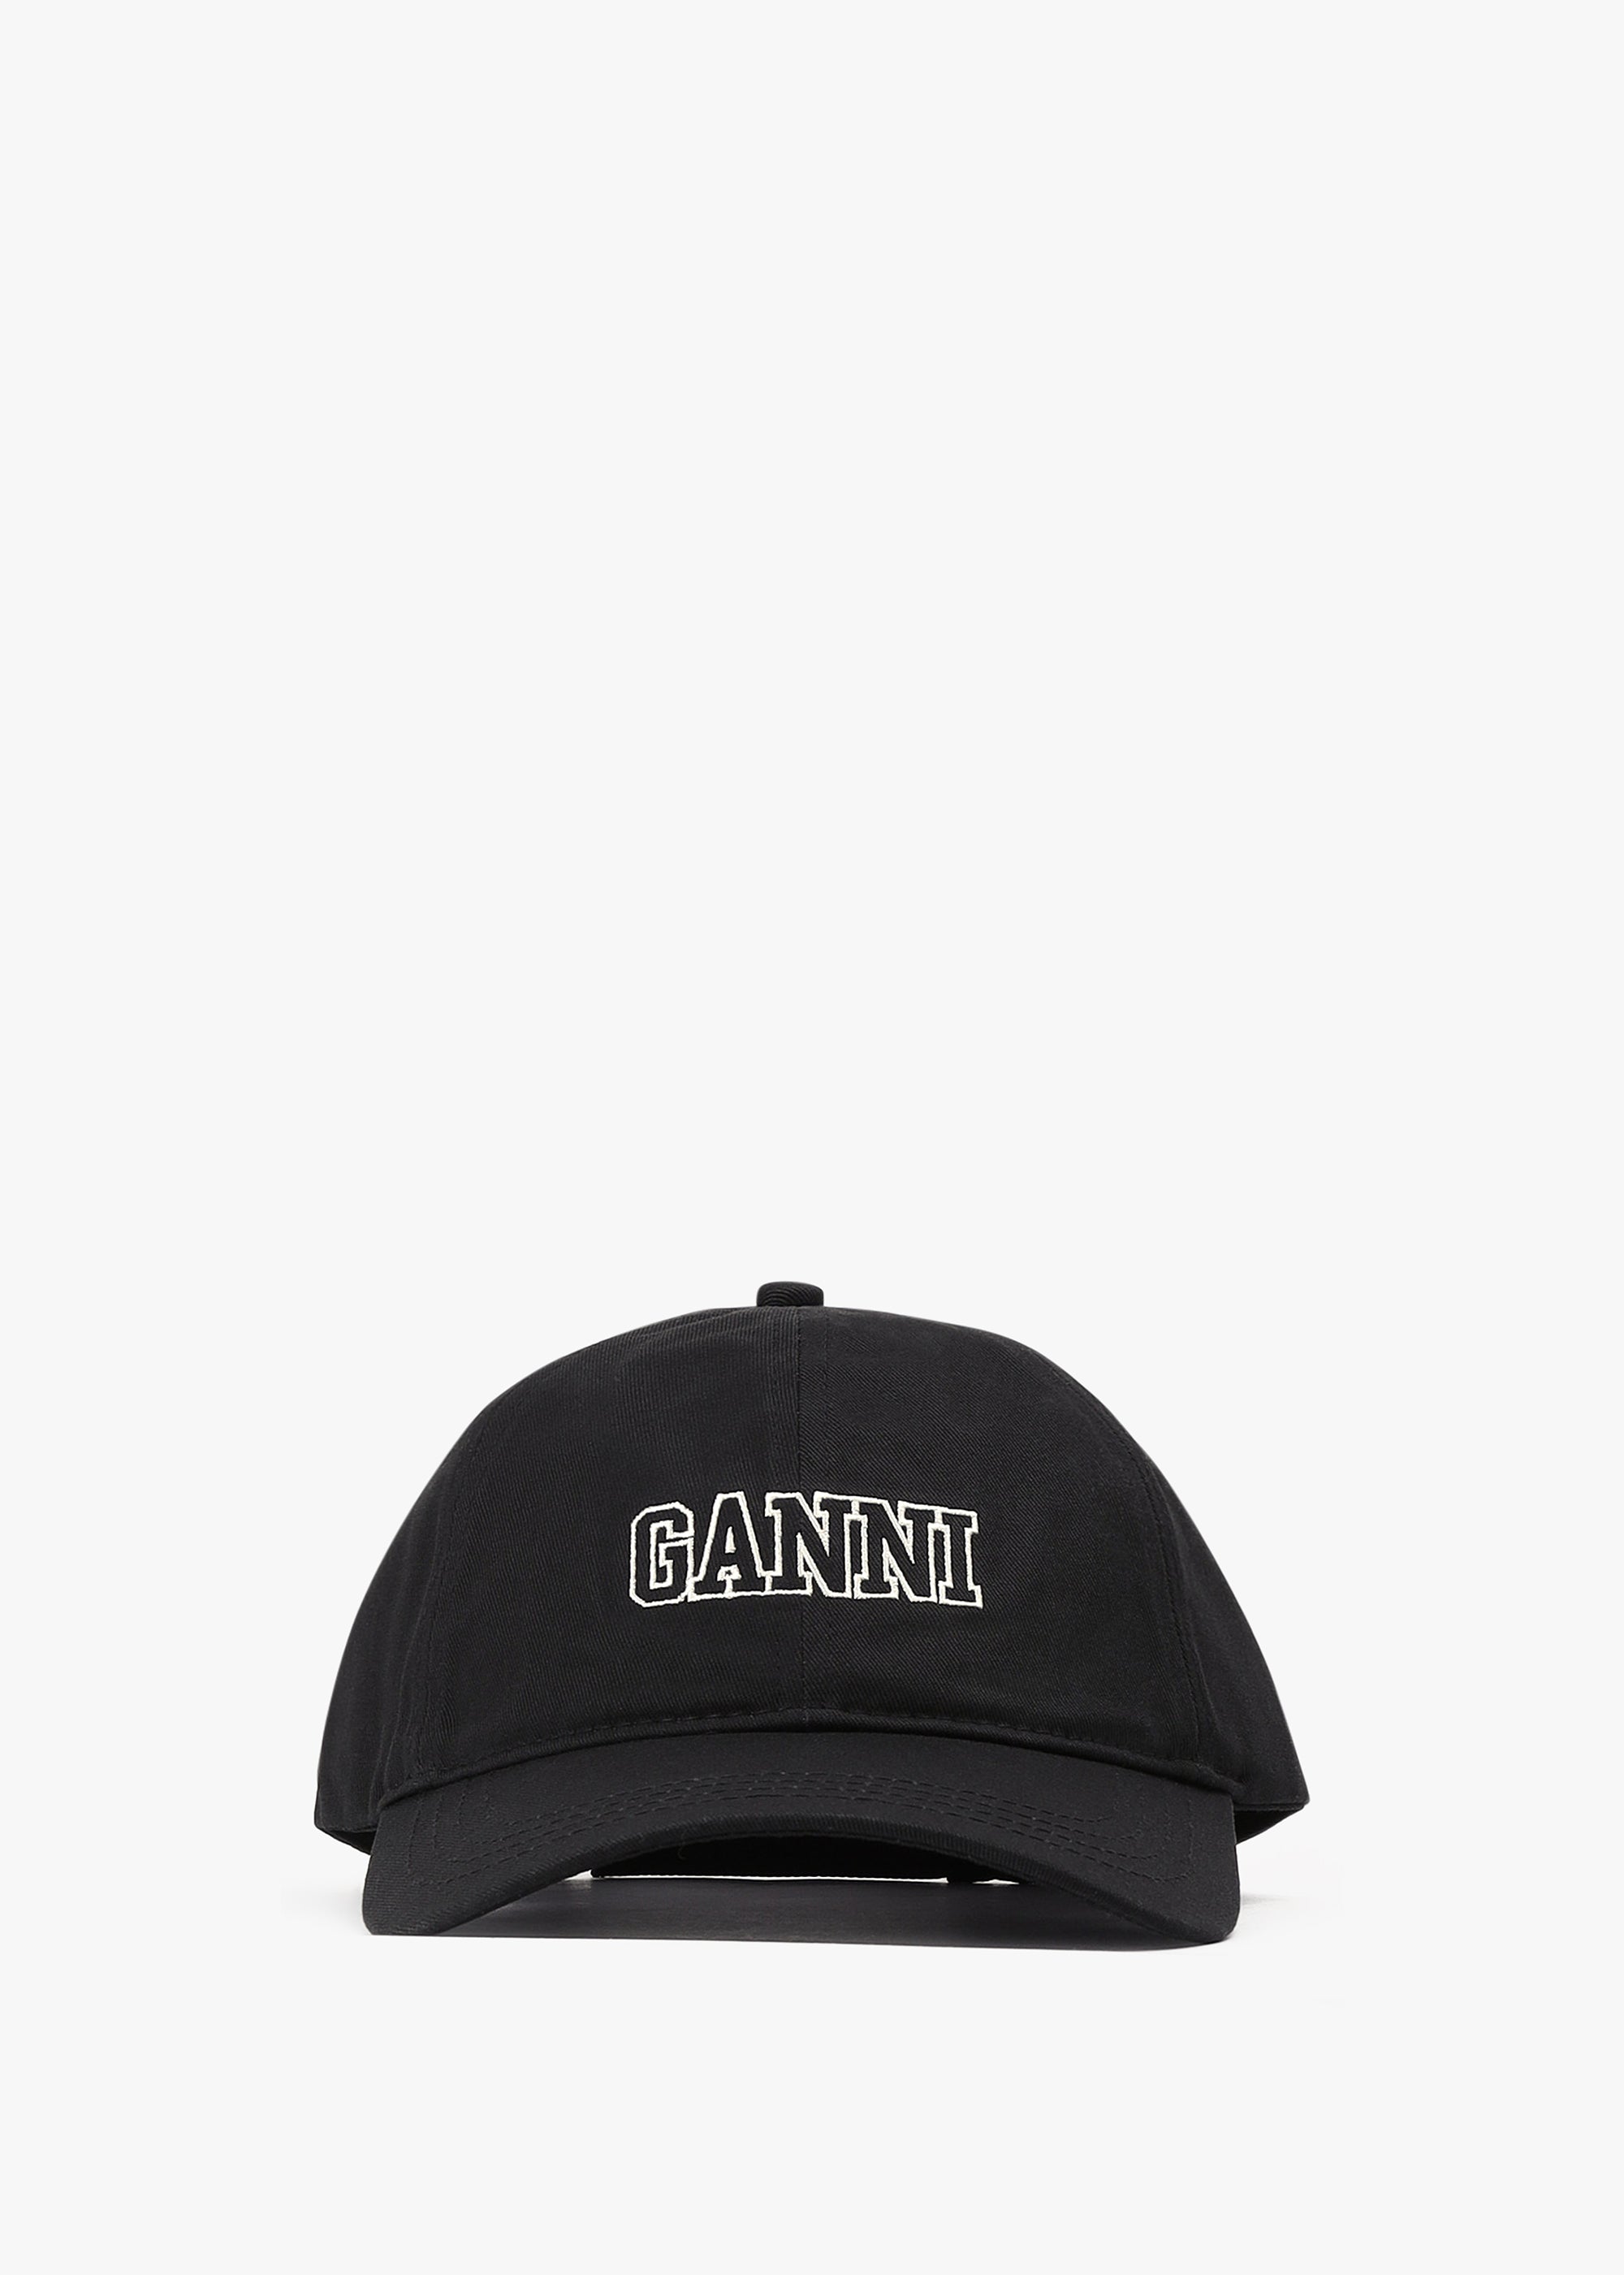 Ganni Women's Cap Black White Hat